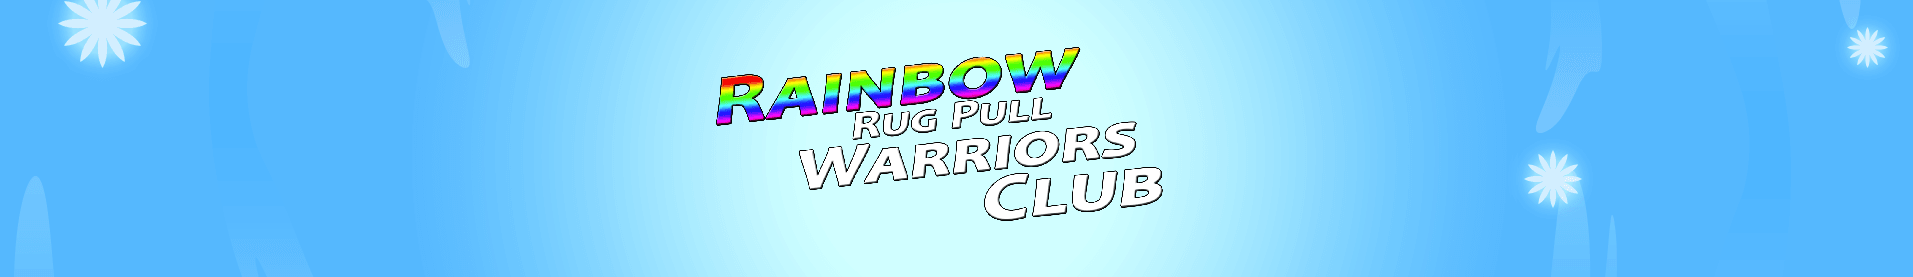 Rainbow_Rug_Pull_Warriors_Club banner